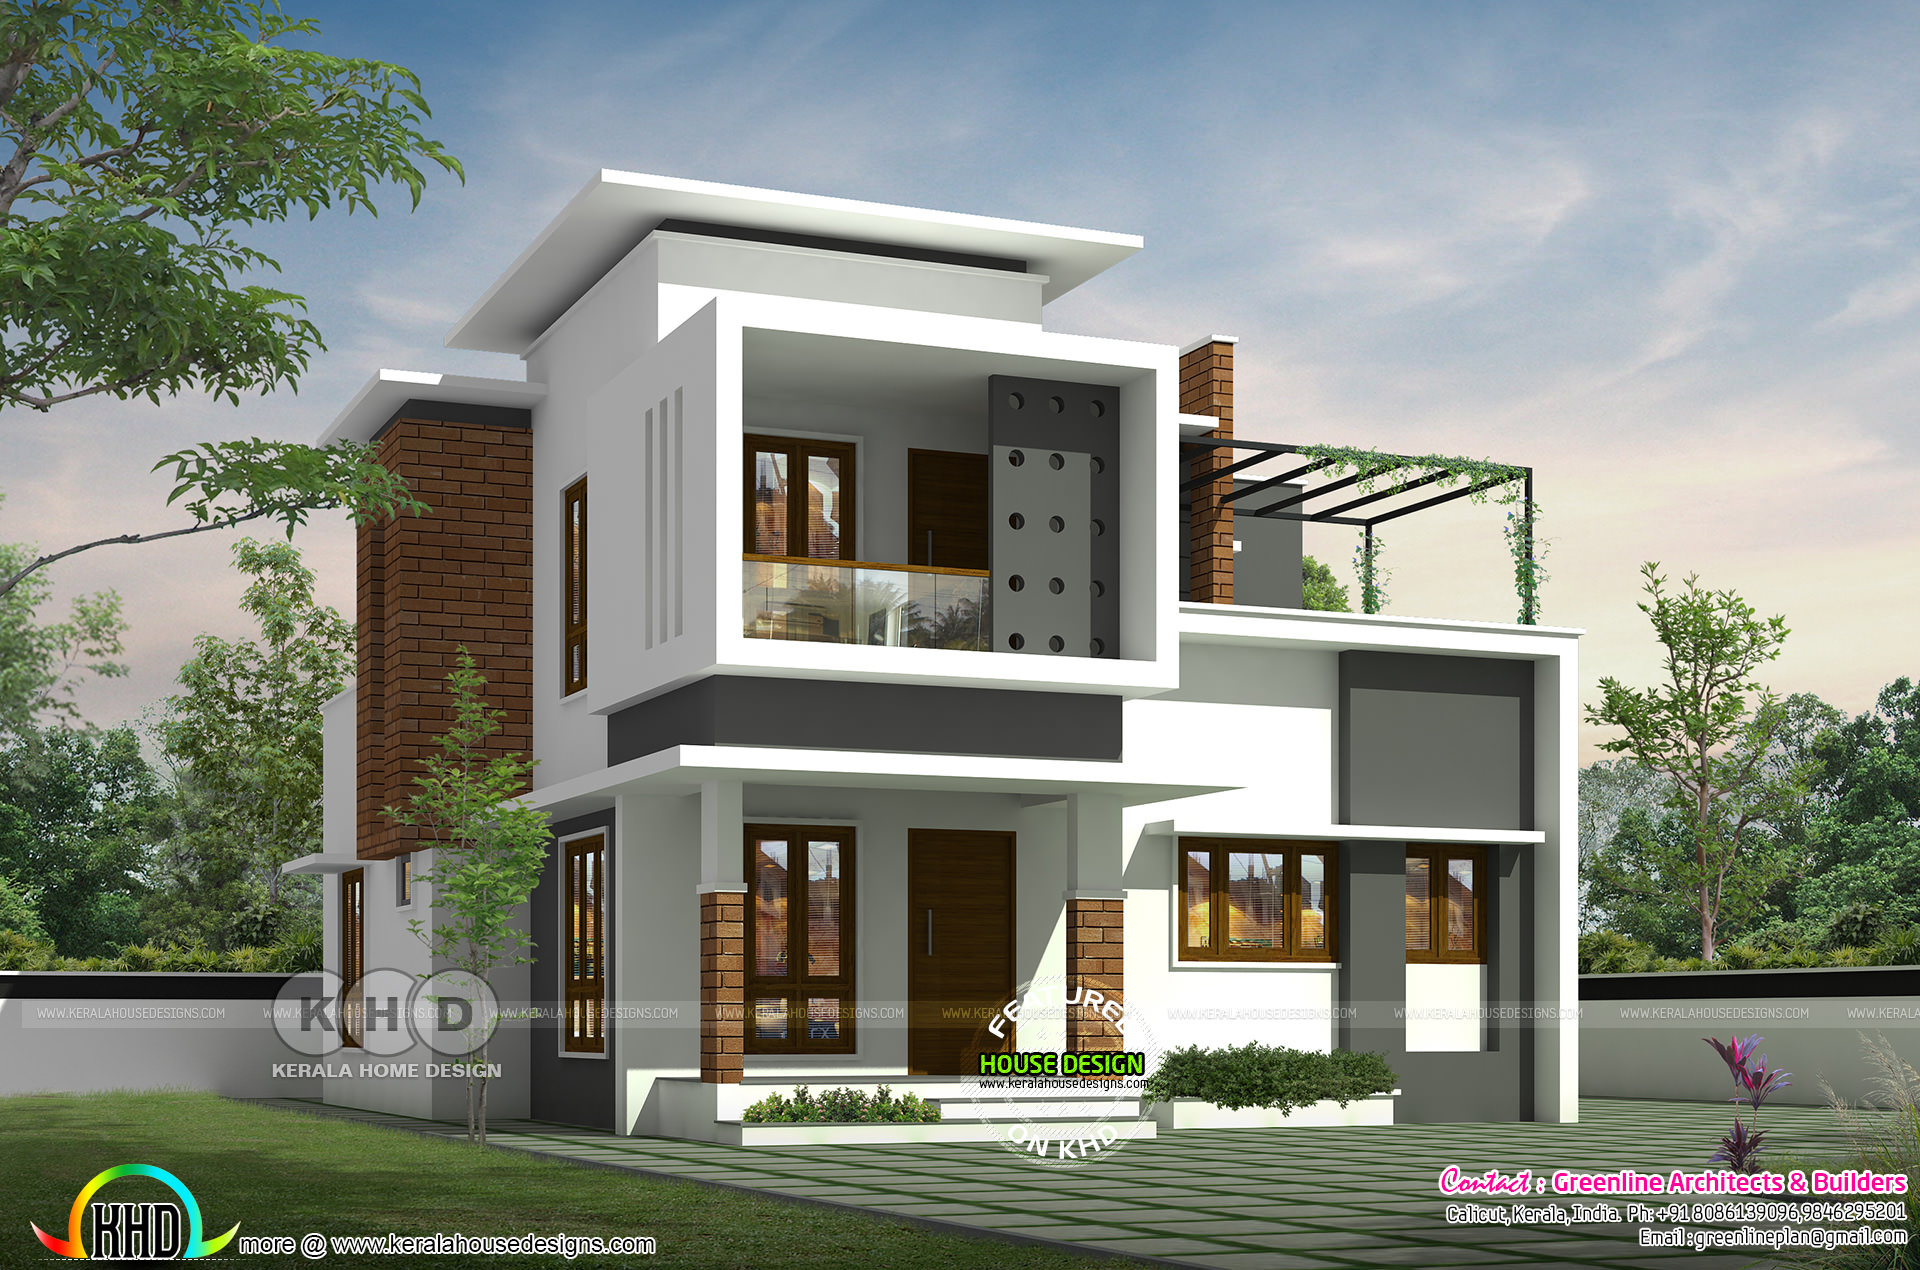 1800 sq-ft 3 bedroom modern house plan - Kerala home design and floor